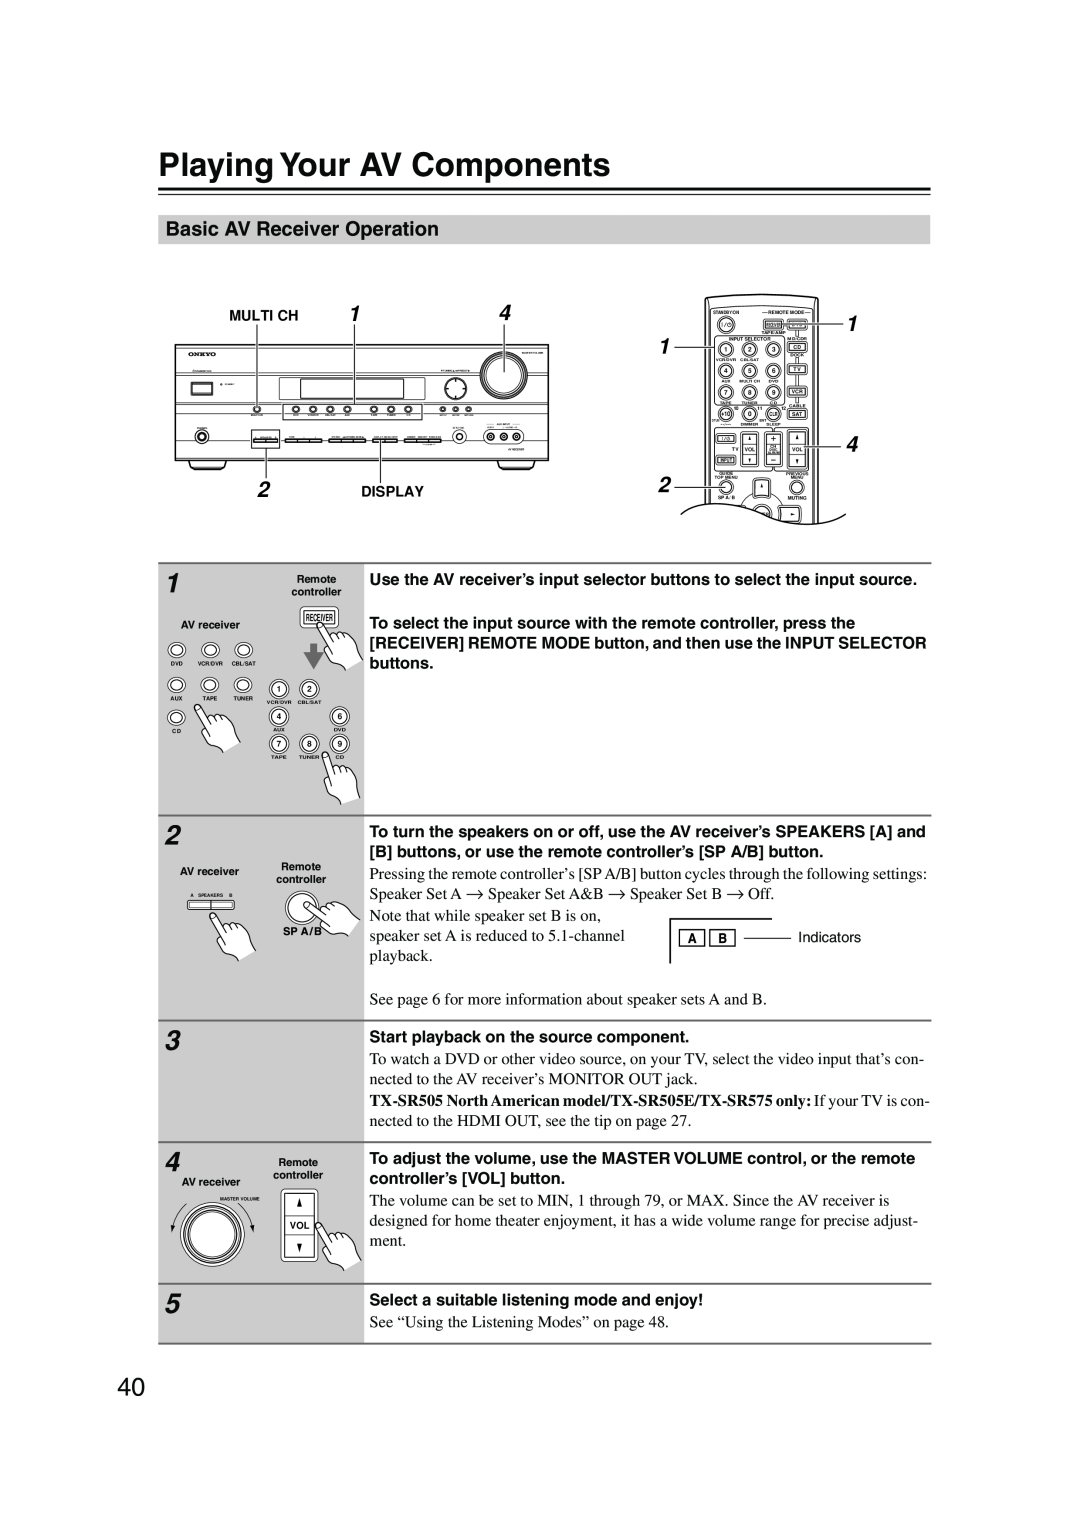 Onkyo TX-SR8550 Playing Your AV Components, Basic AV Receiver Operation, nected to the AV receiver’s MONITOR OUT jack 